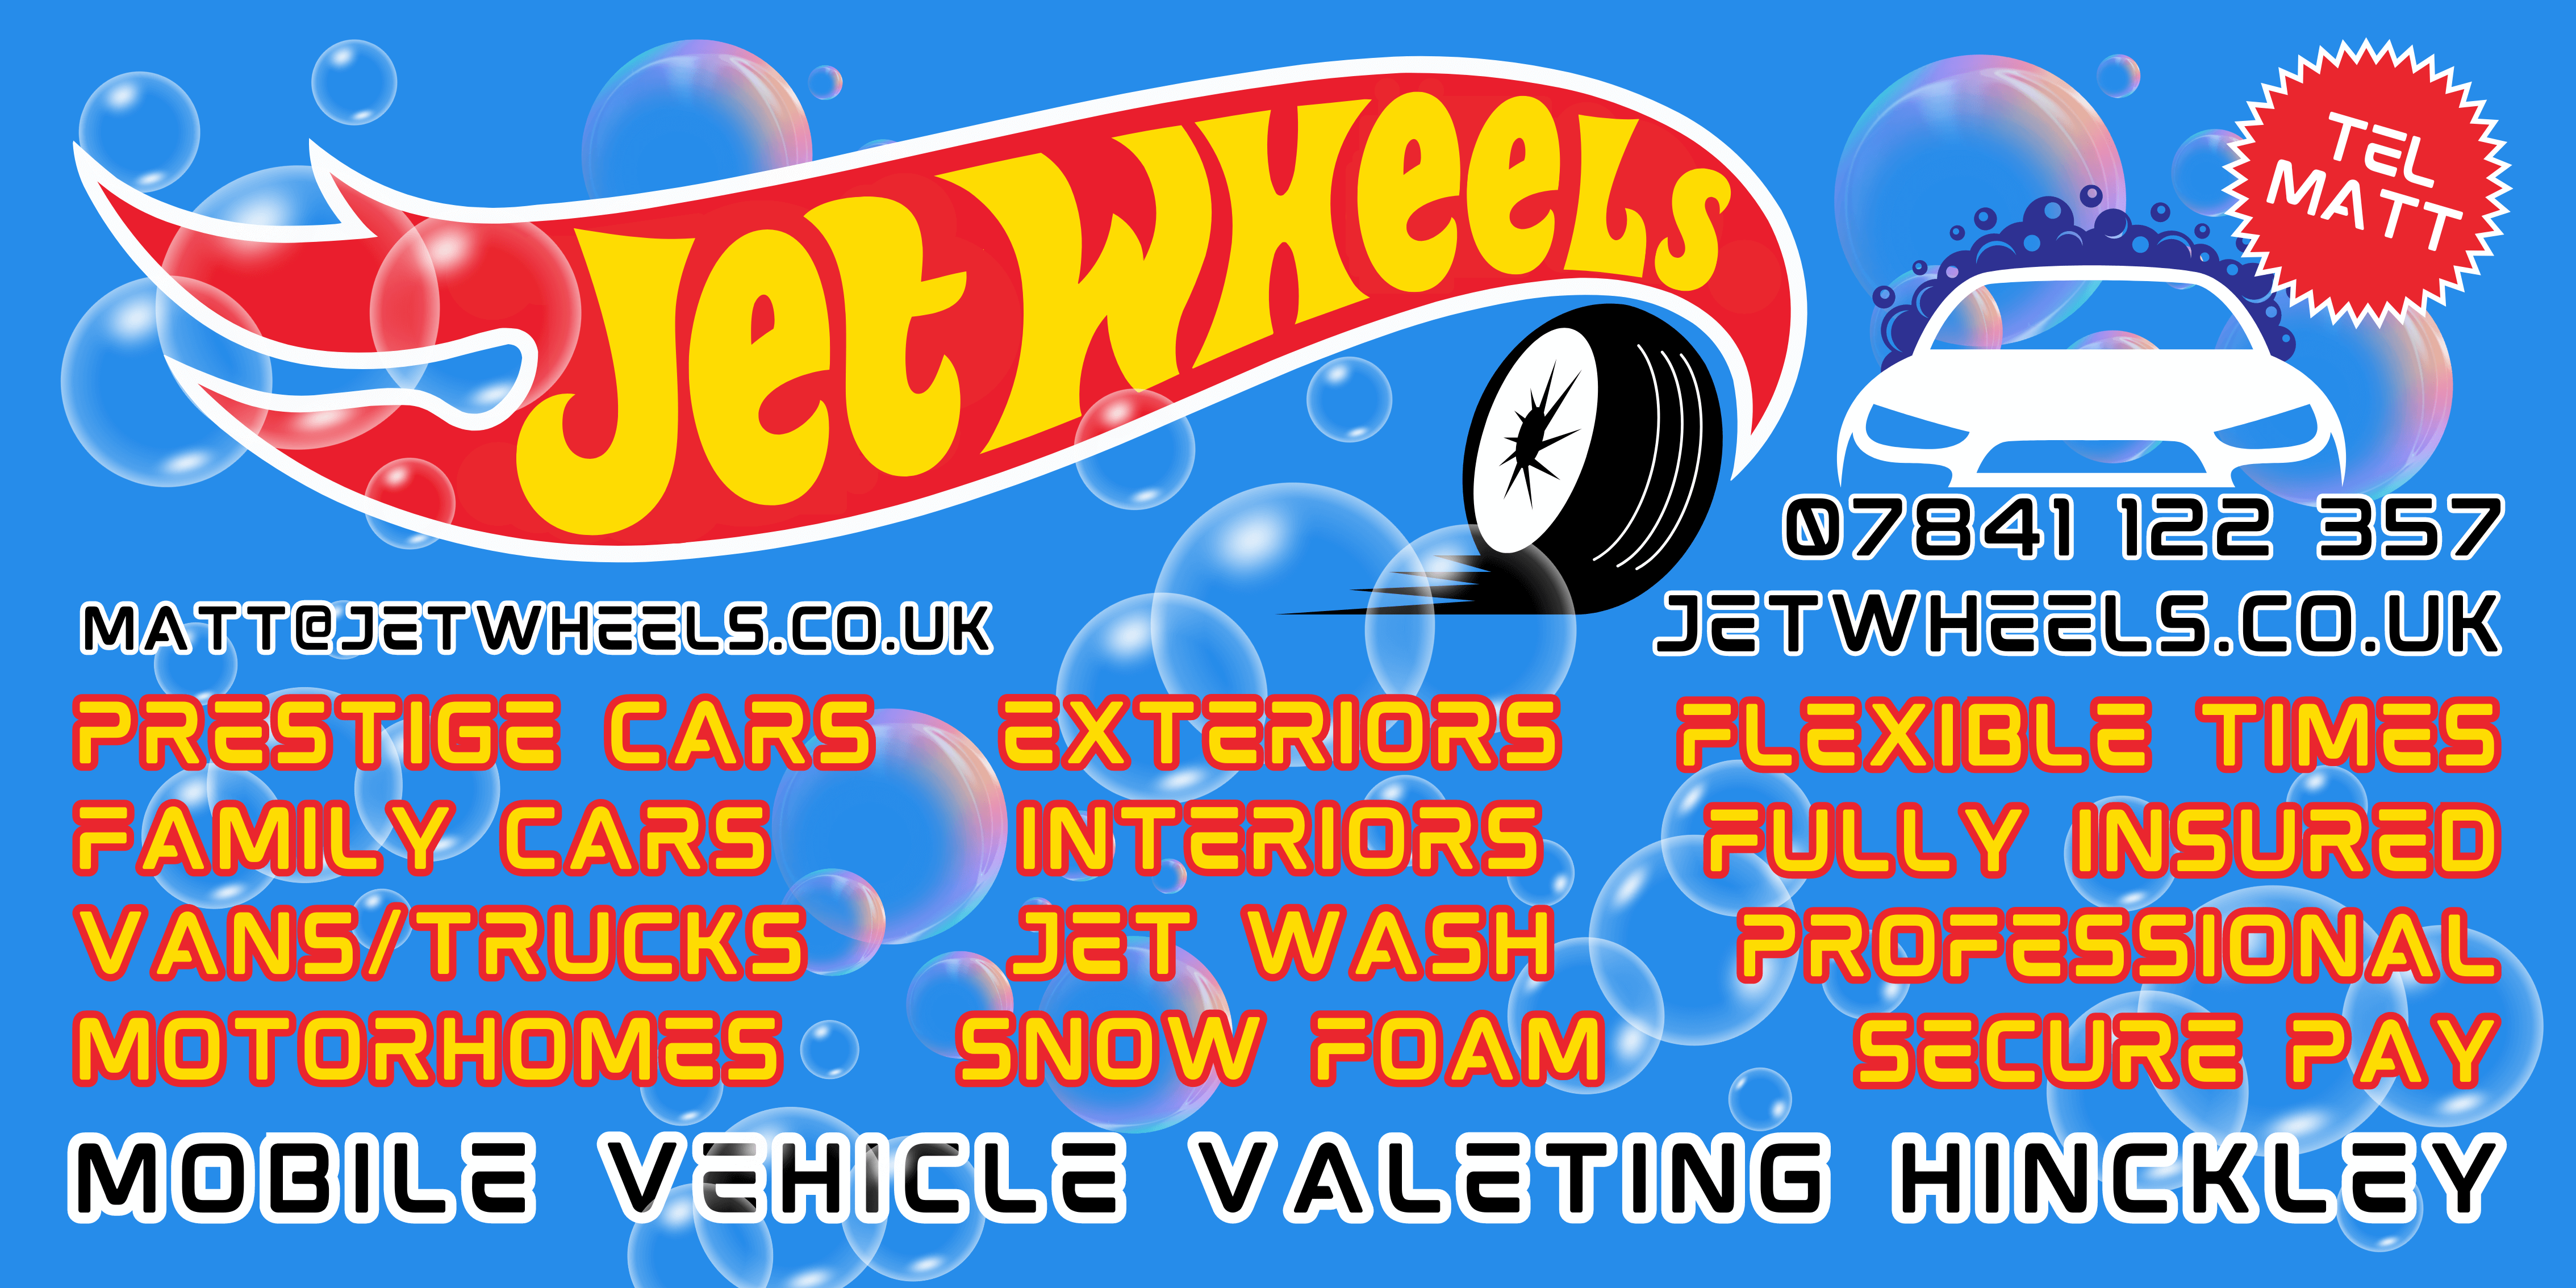 FAQ Jet Wheels mobile Valeting Hinckley